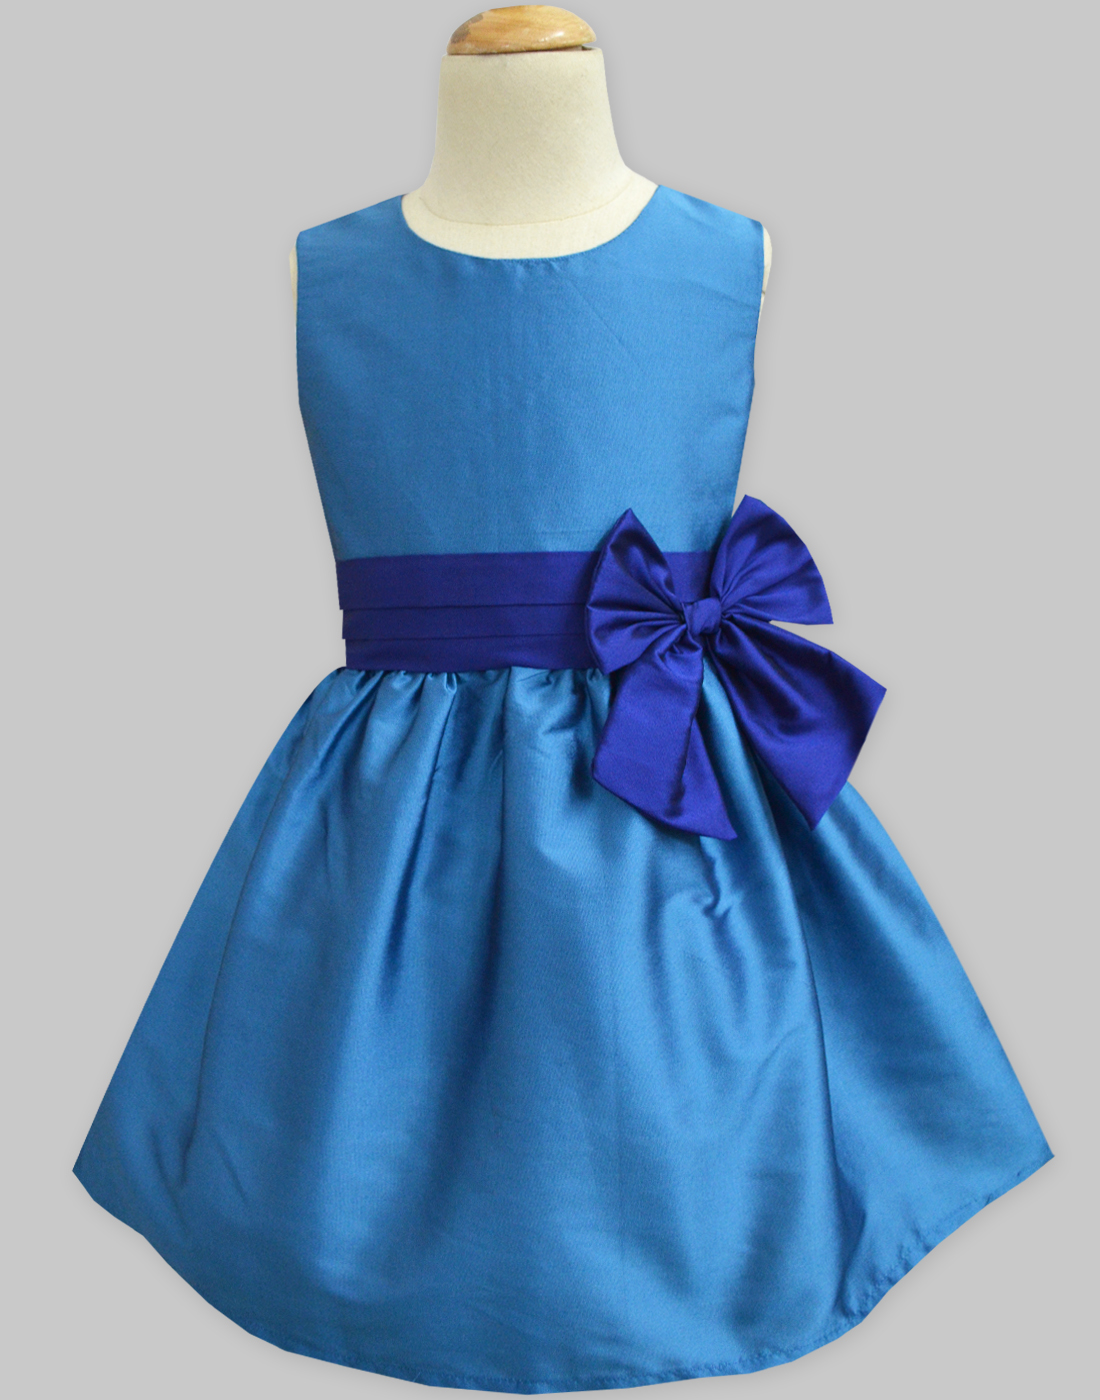 Turquoise-Royal Blue Penelope Dress - A.T.U.N.